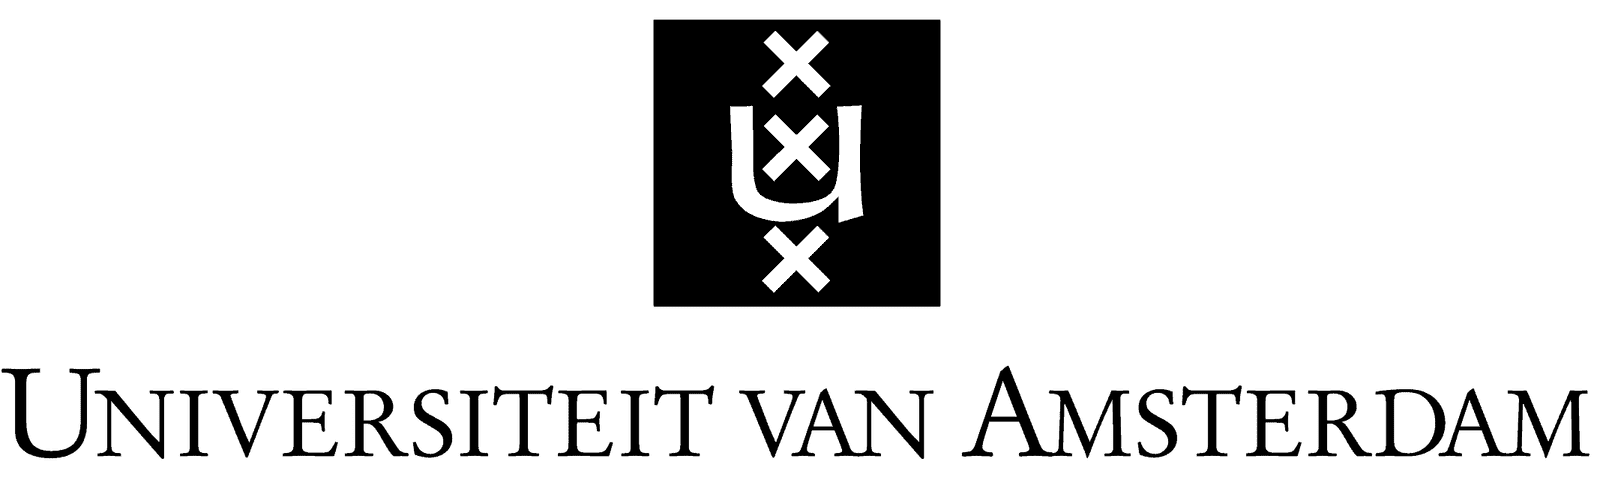 universiteit-van-amsterdam-logo-png-transparent